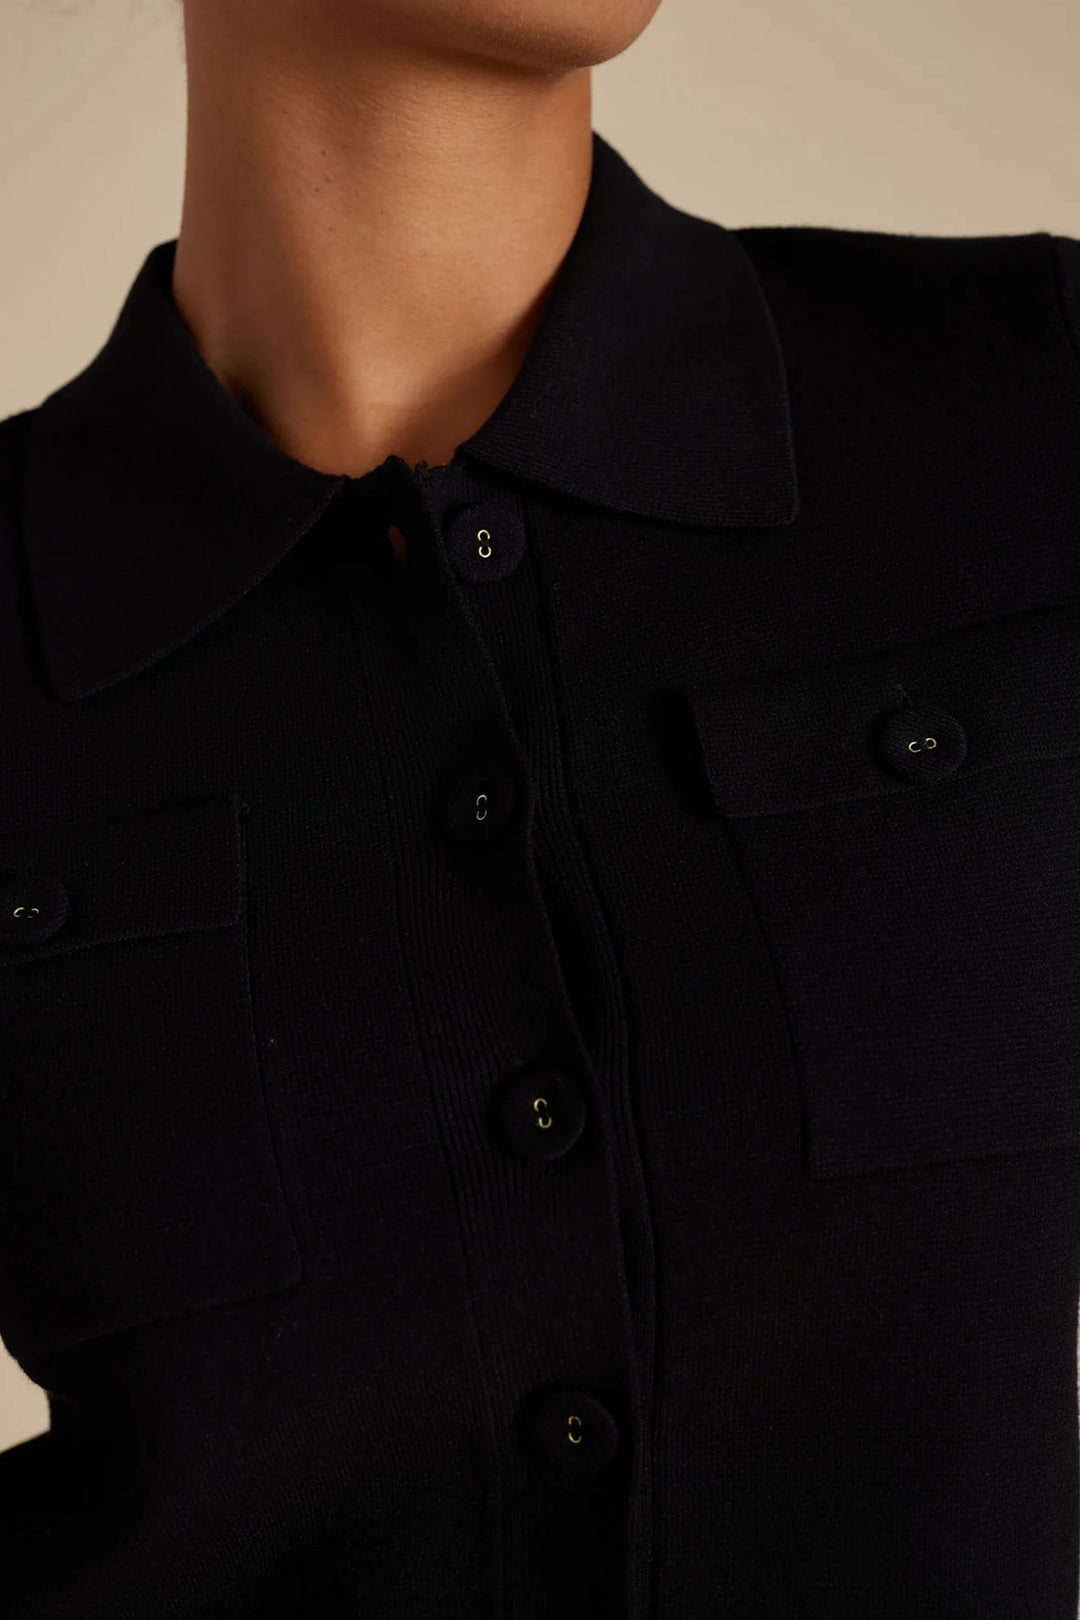 Alessandra| Chelsea Crepe Knit Jacket in Black